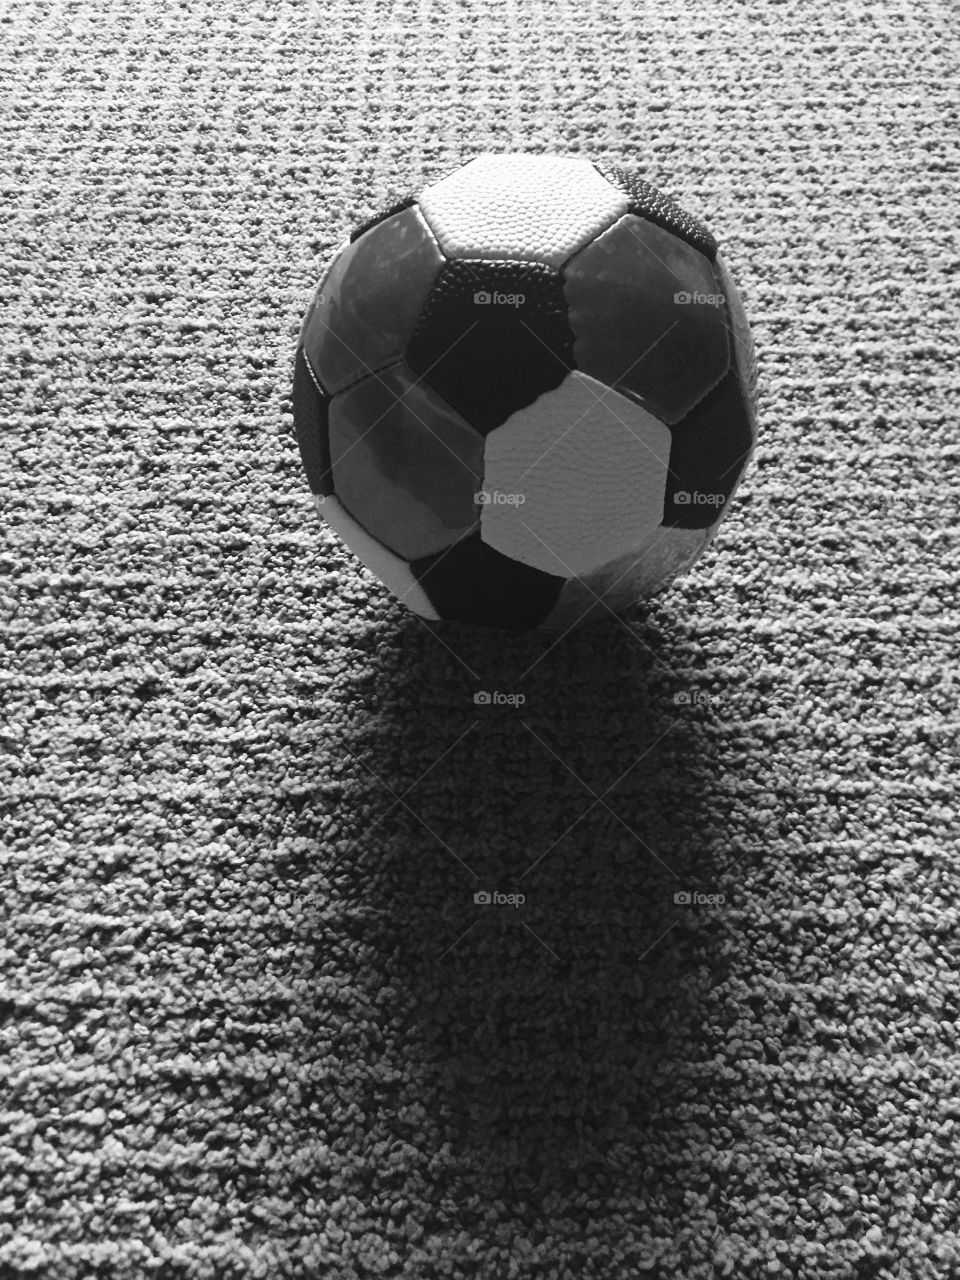 Soccer ball shadow 